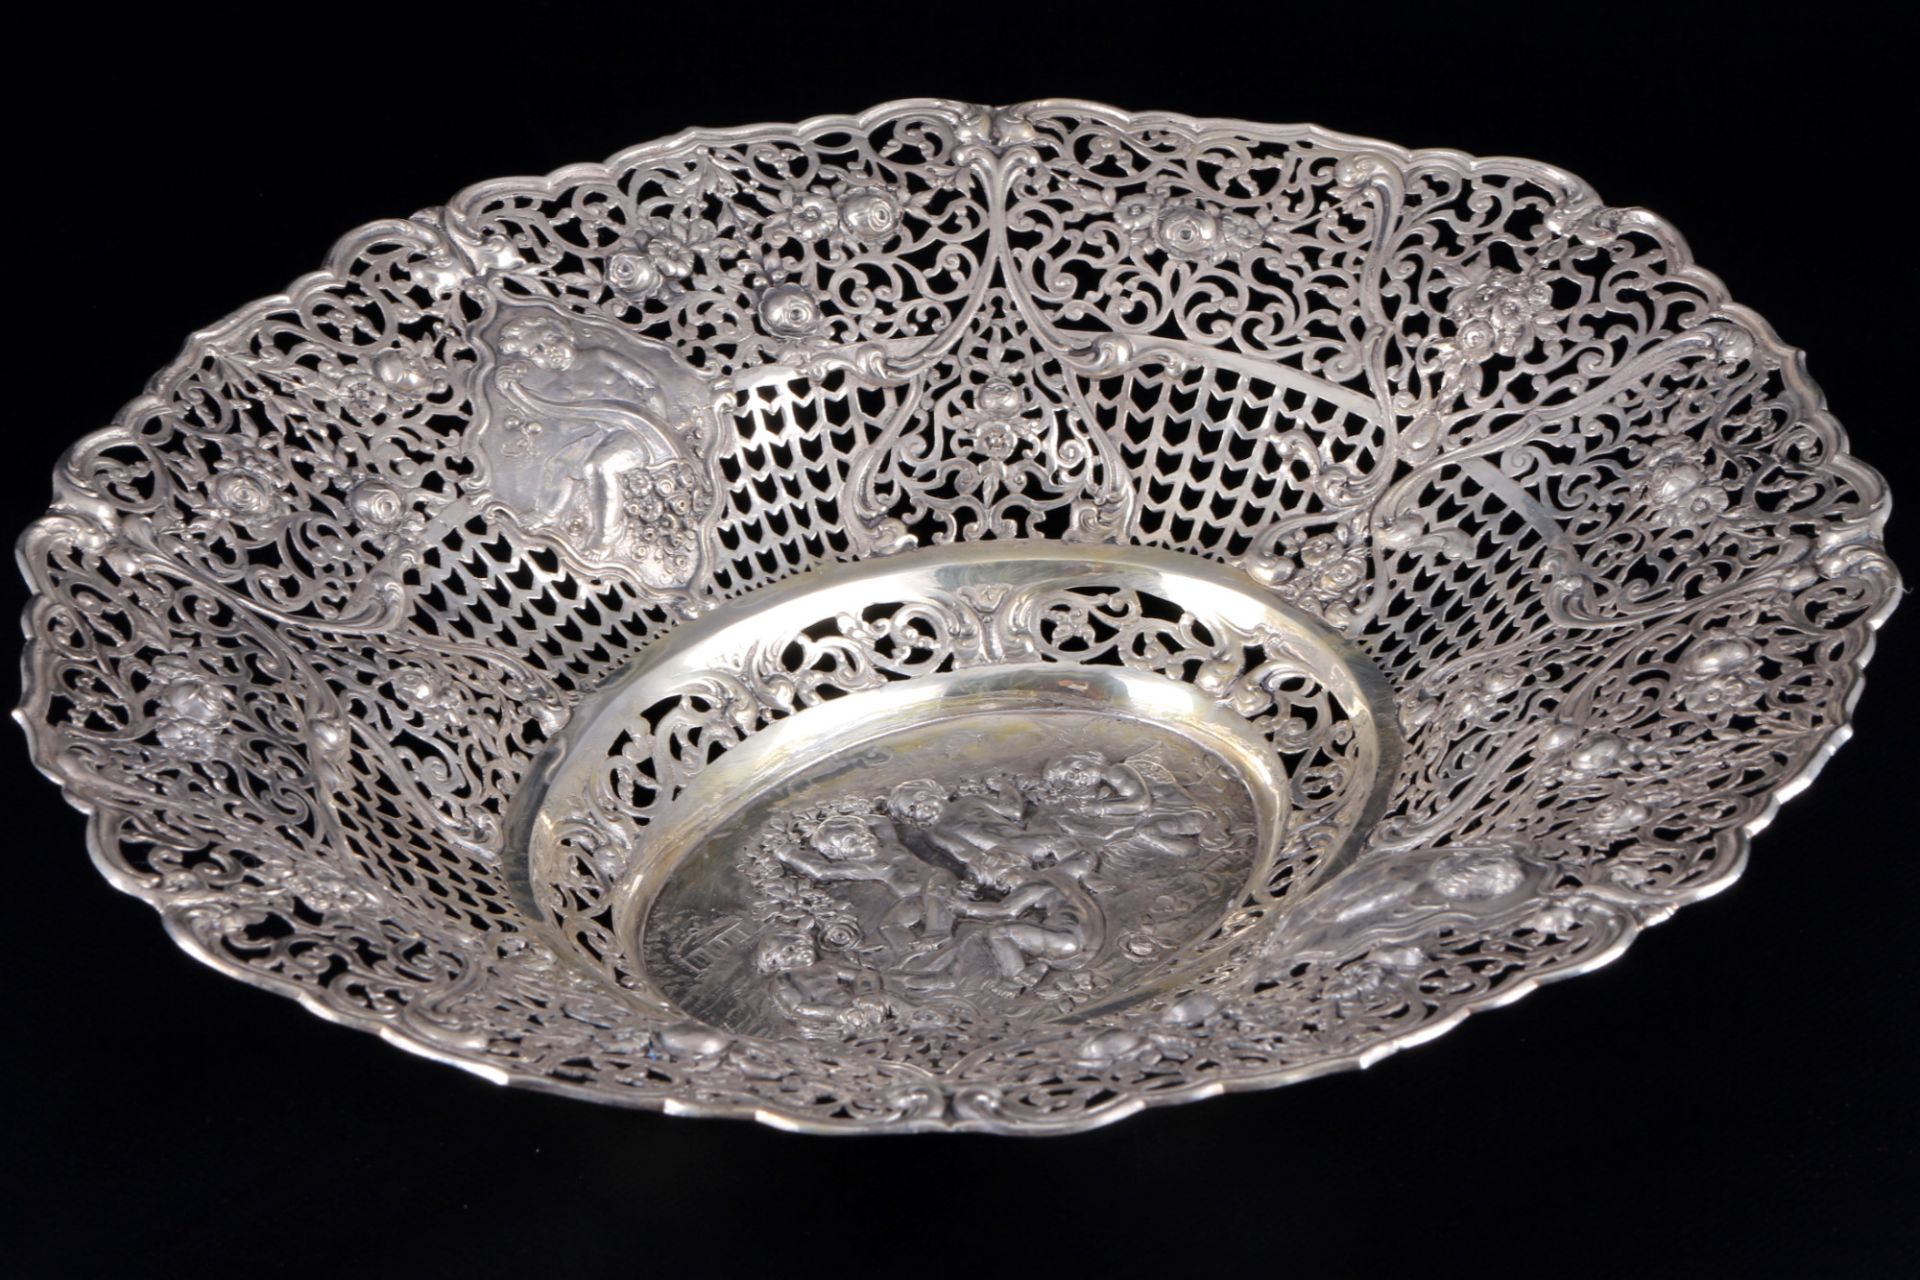 800 silver large cherub bowl, Silber große Puttenschale, - Image 2 of 4